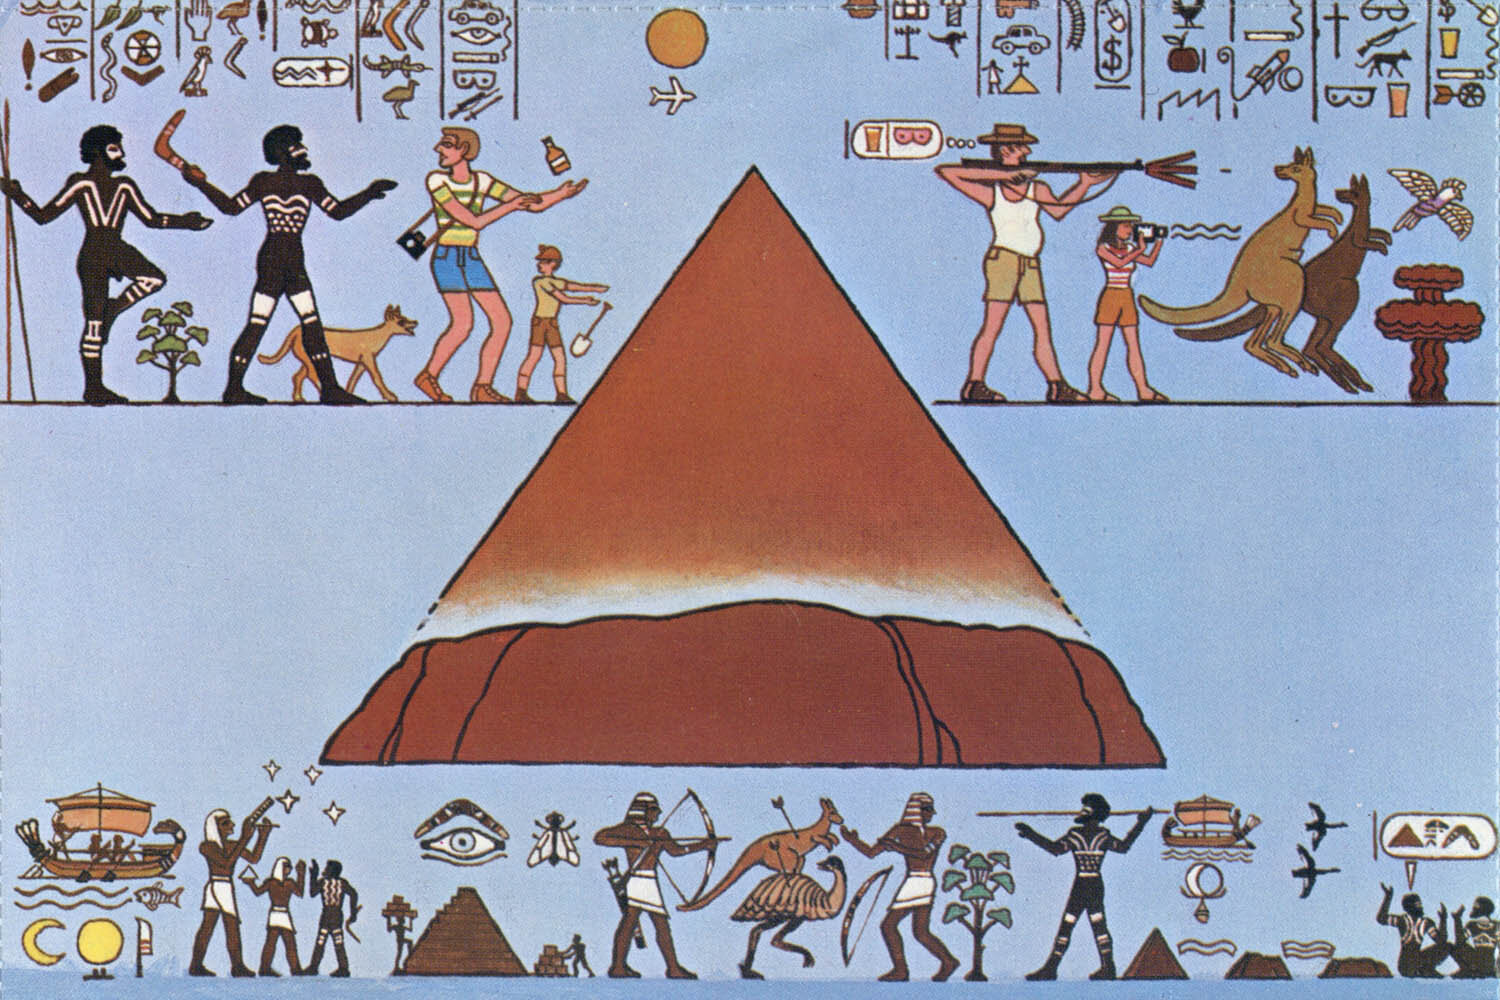 Con Aslanis: Ayer's Pyramid